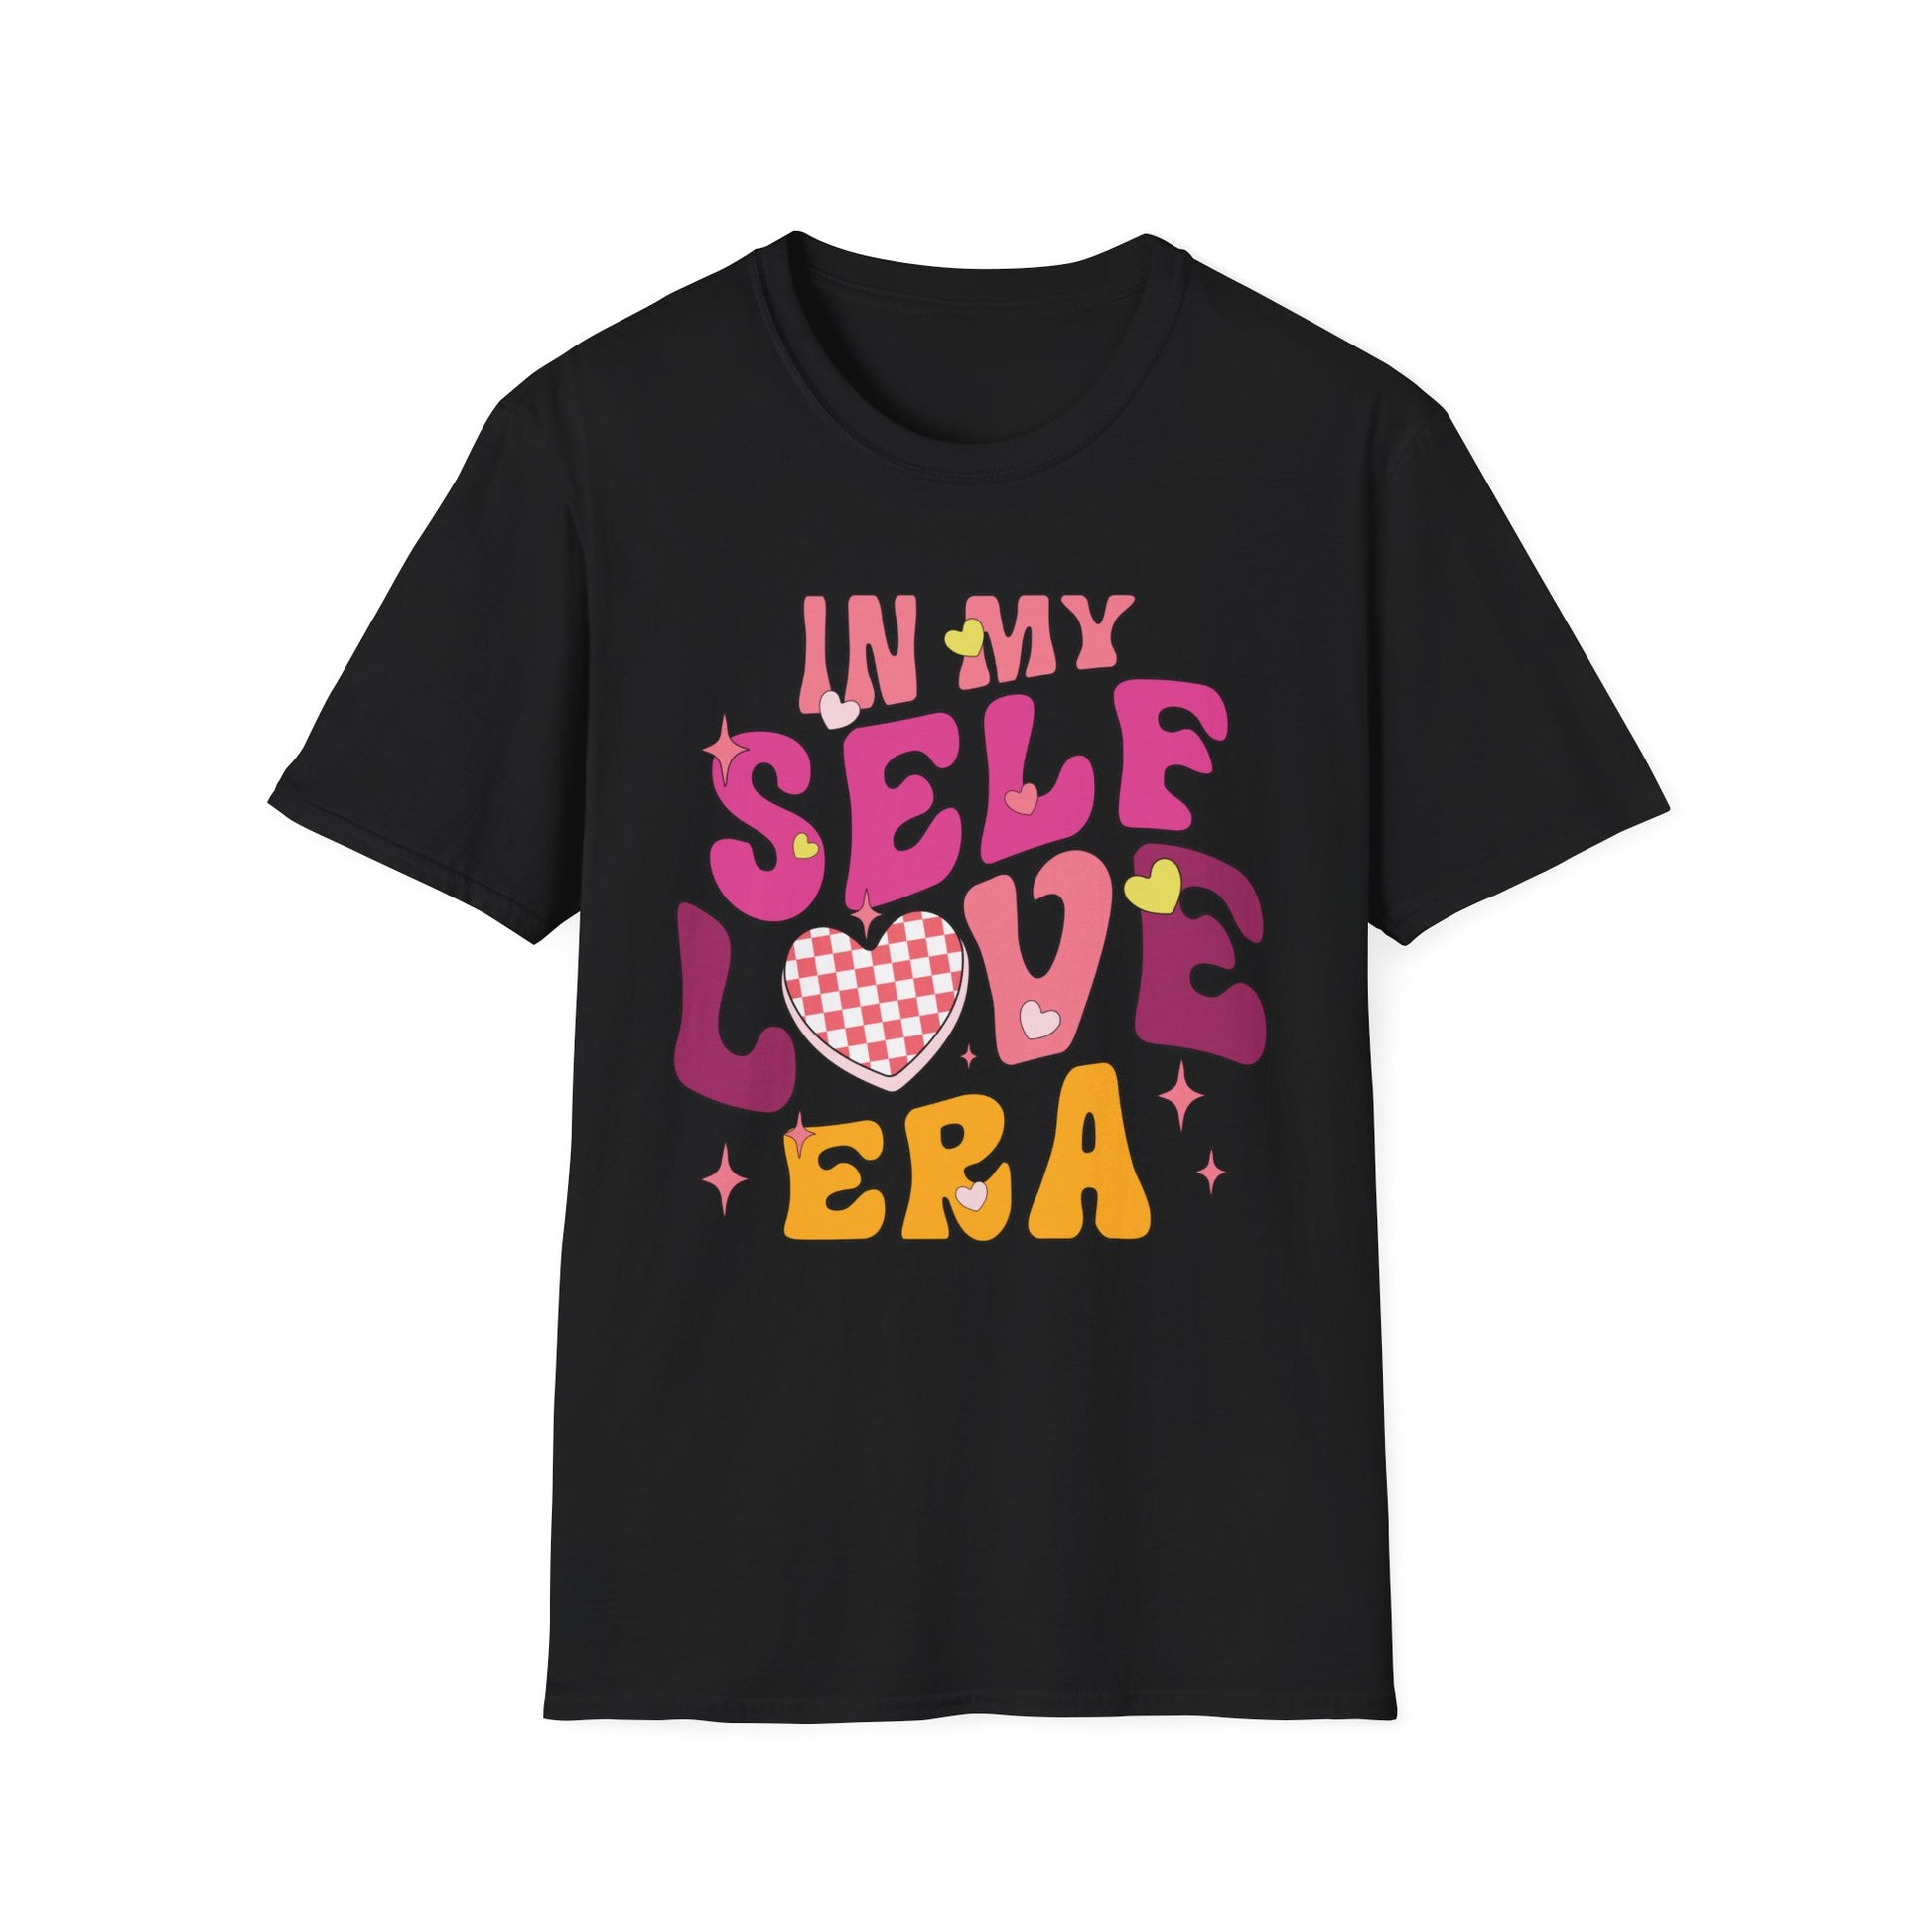 In my self love era t-shirt 